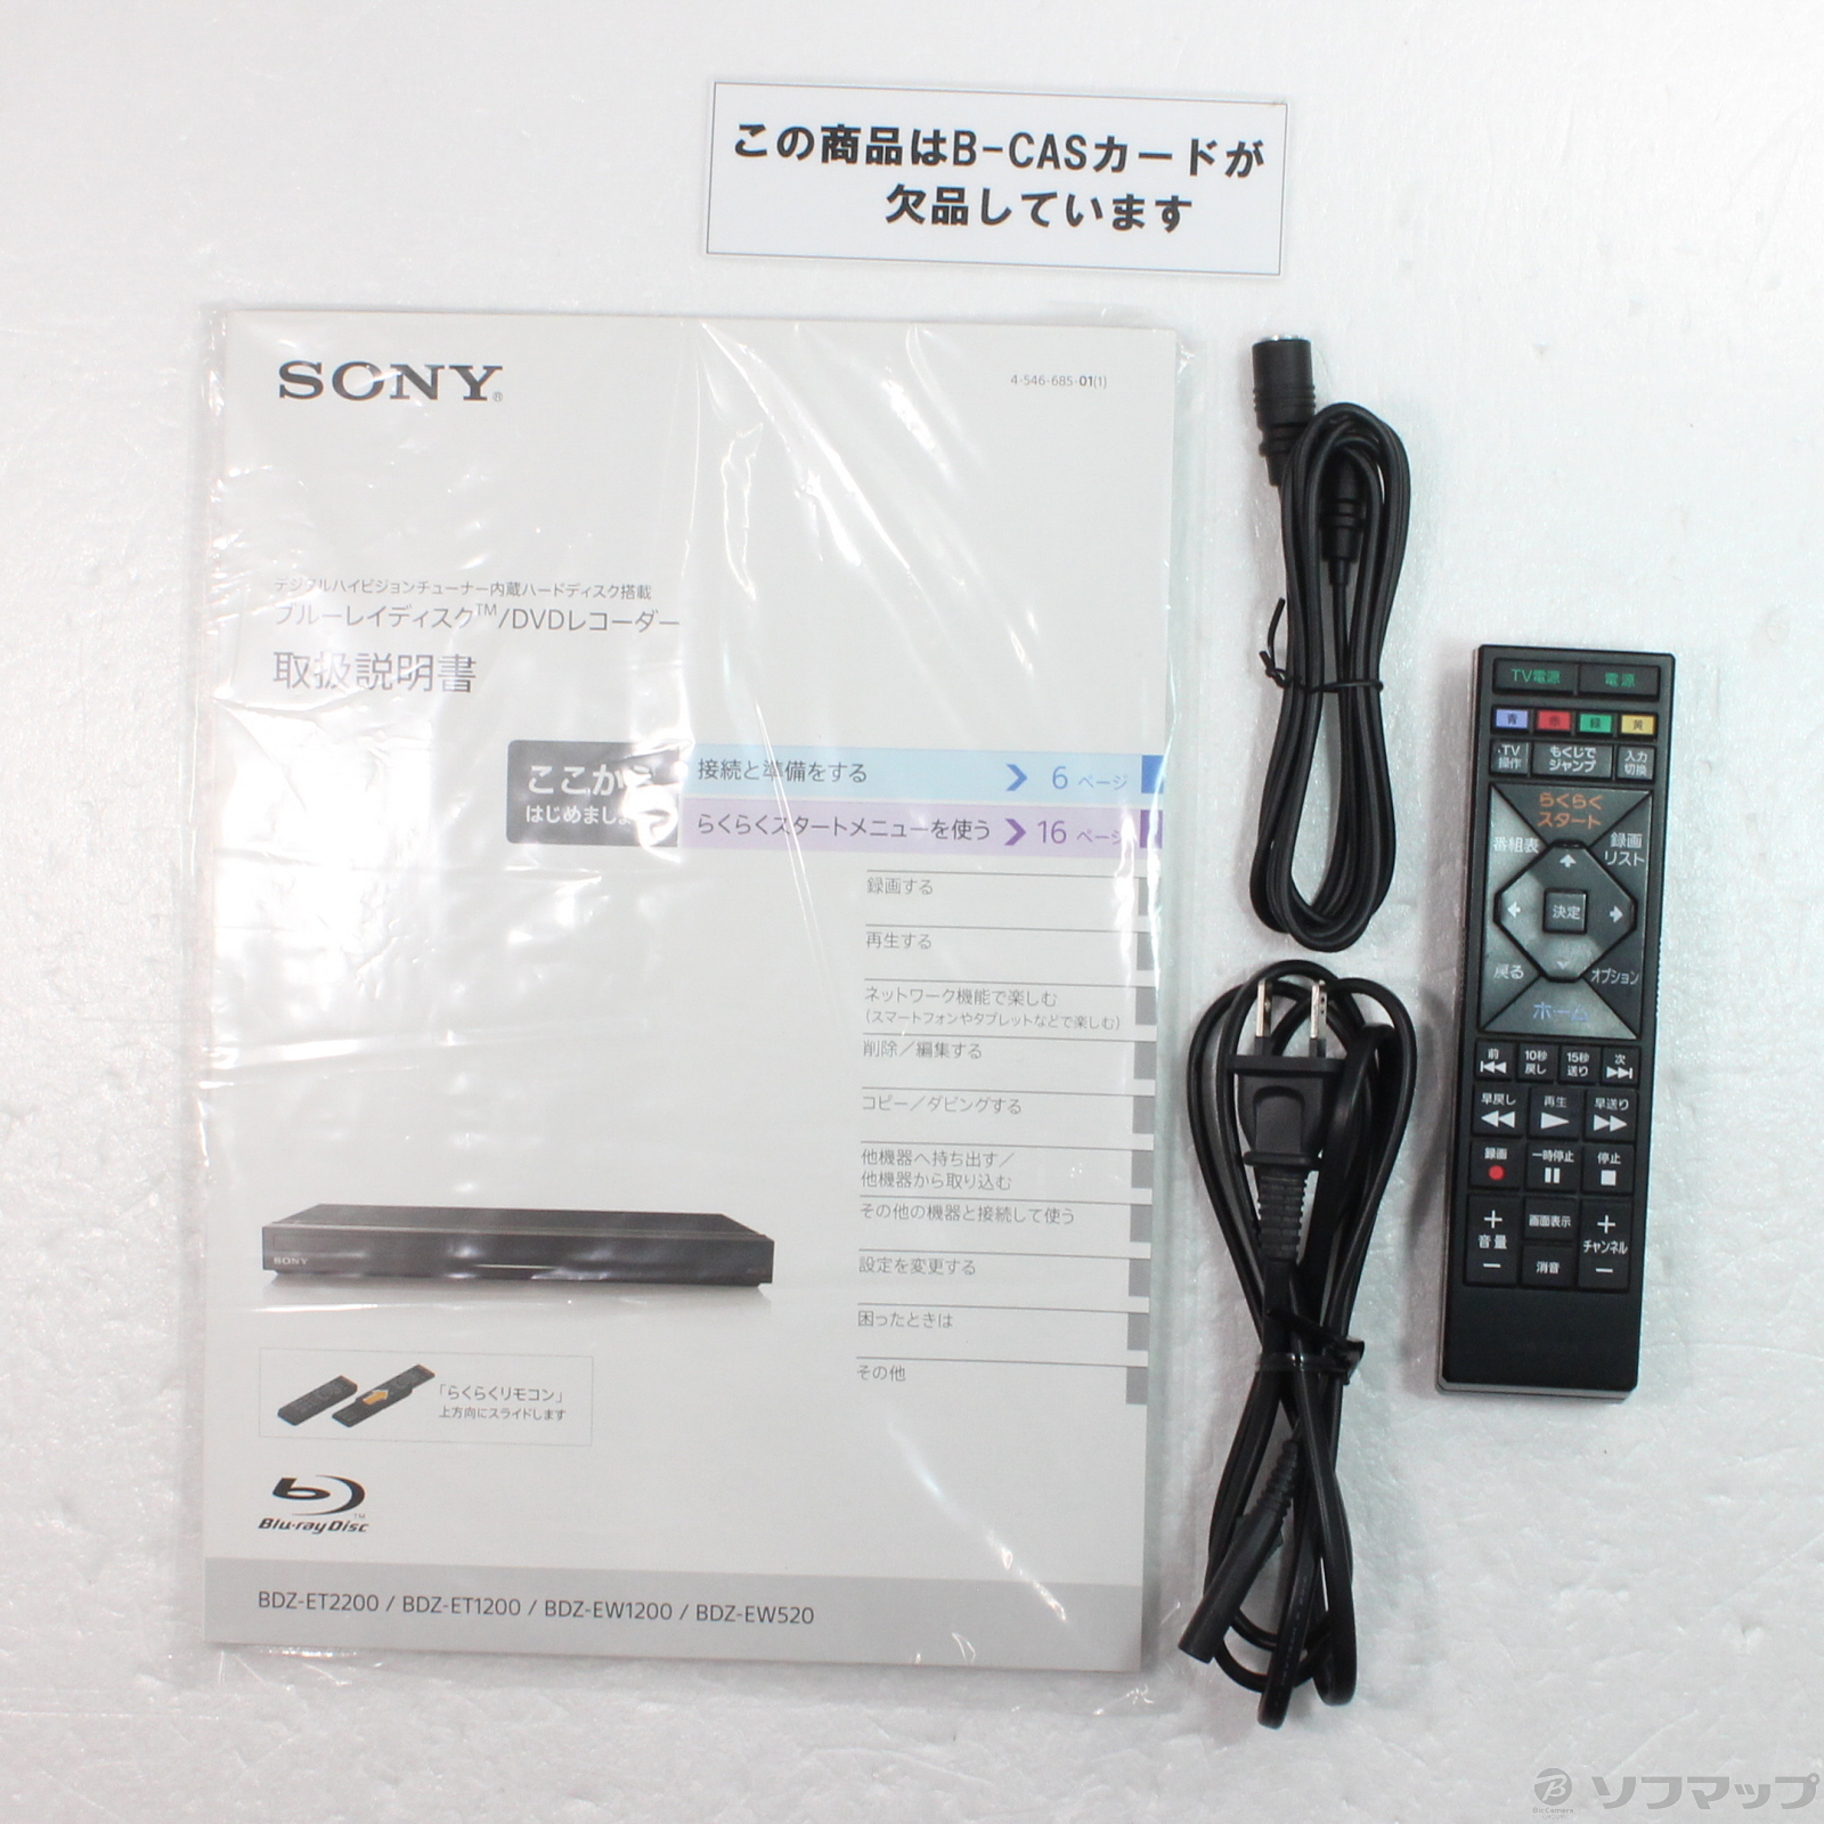 SONY BDZ-EW1200 1TB ブルーレイレコーダー ソニー - ブルーレイレコーダー